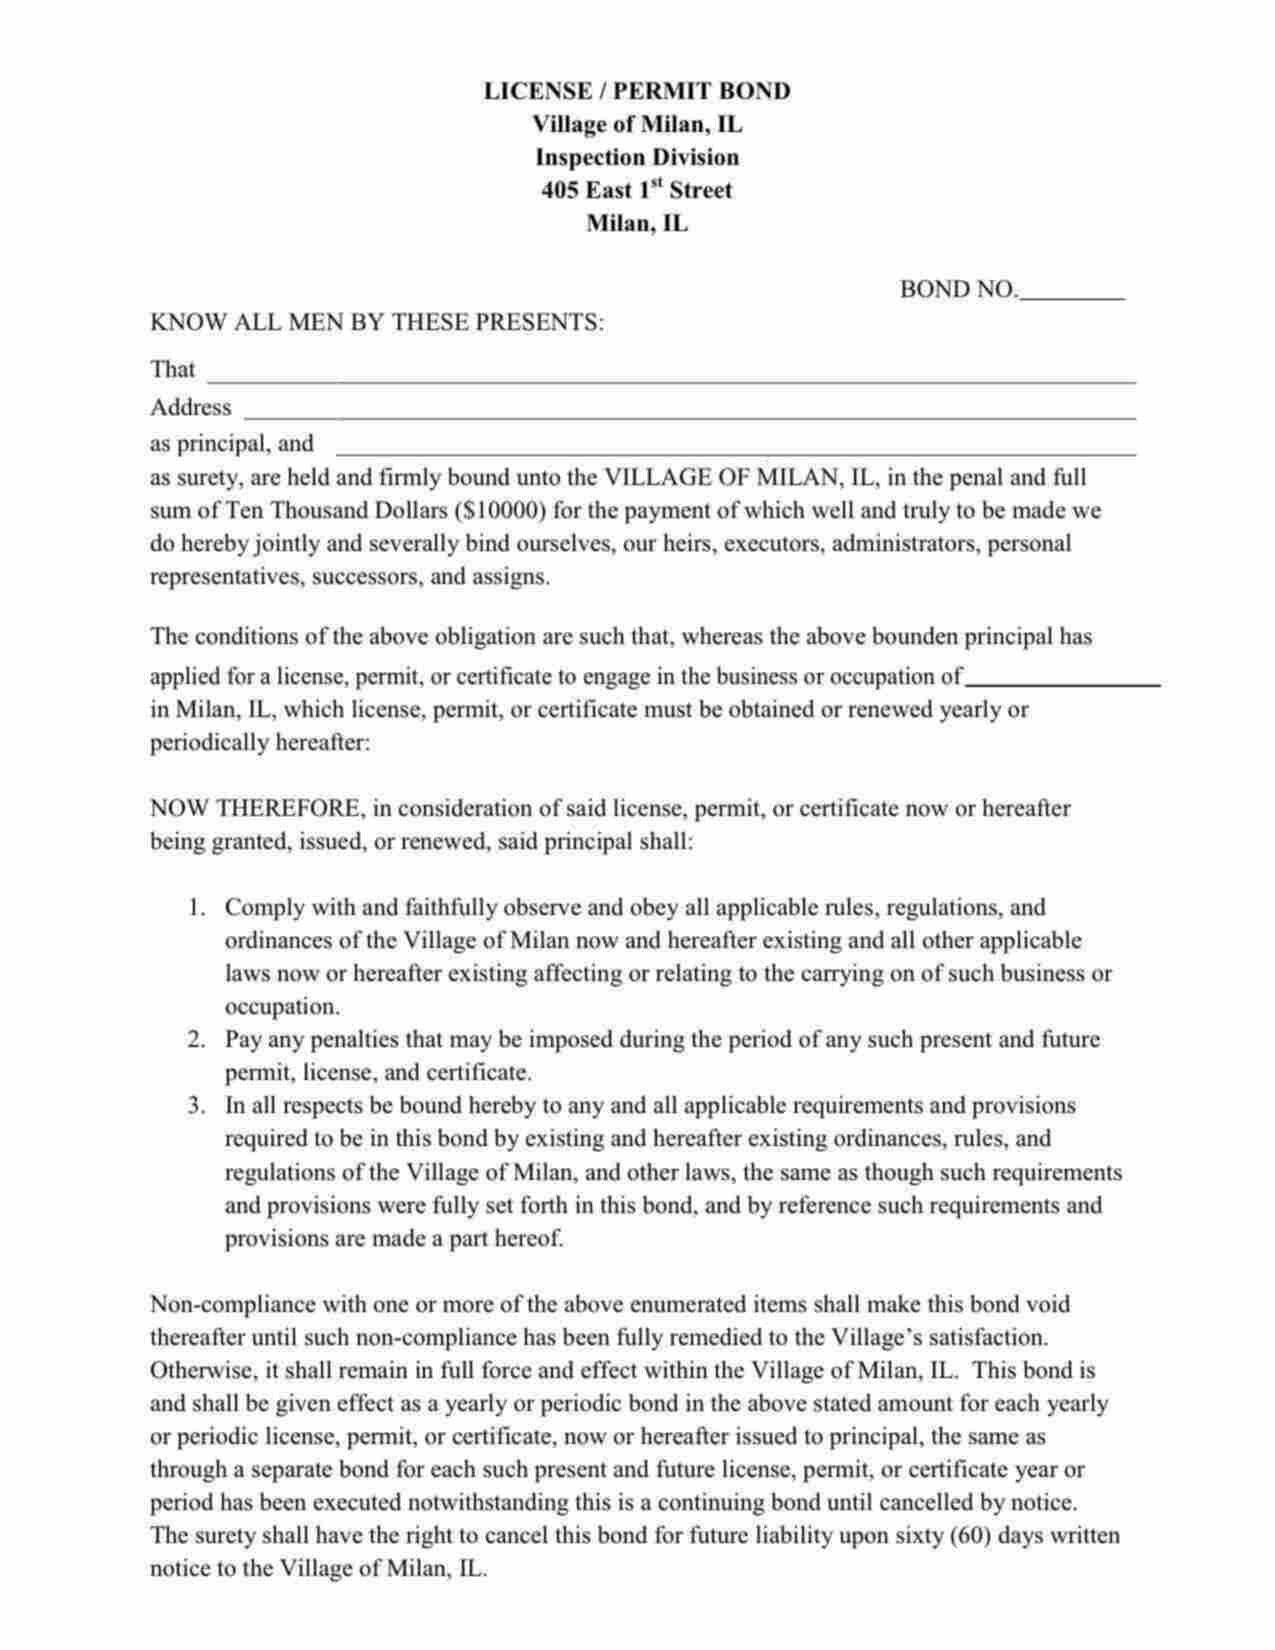 Illinois License and Permit Bond Form